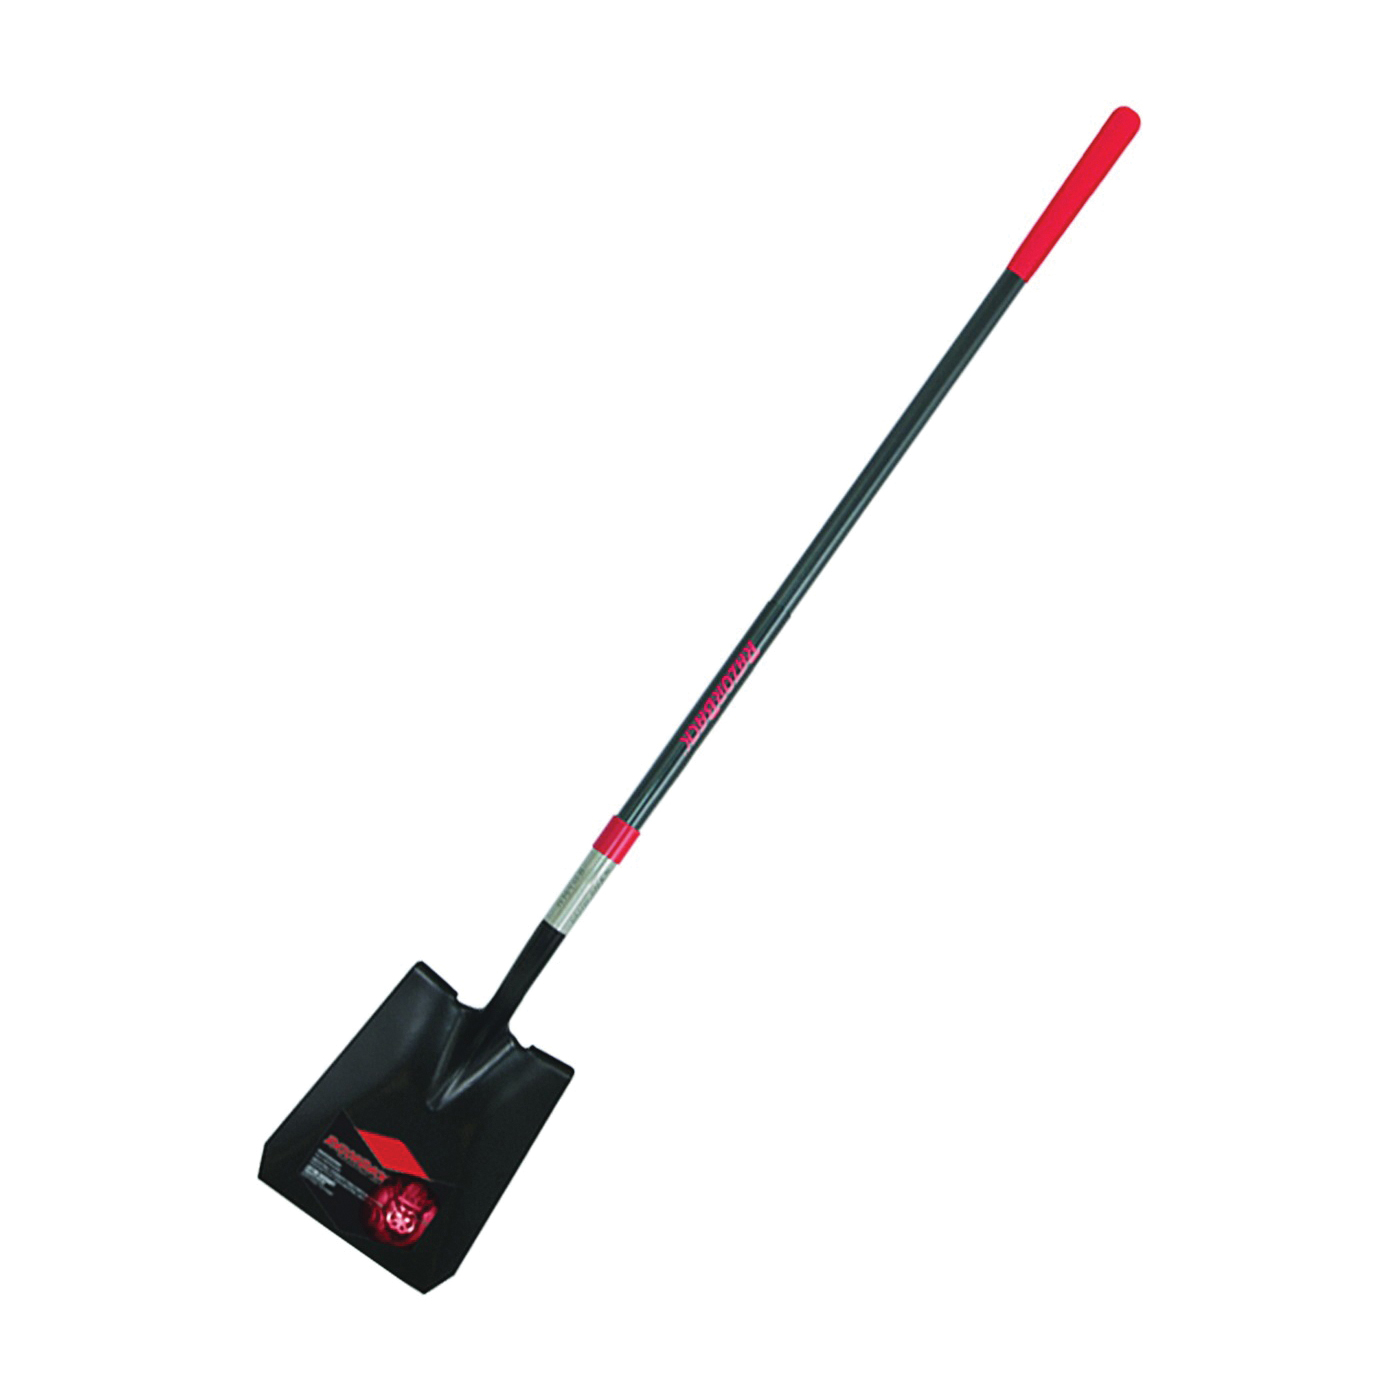 2594500 Shovel, 9-1/2 in W Blade, Steel Blade, Fiberglass Handle, Cushion Grip Handle, 48 in L Handle